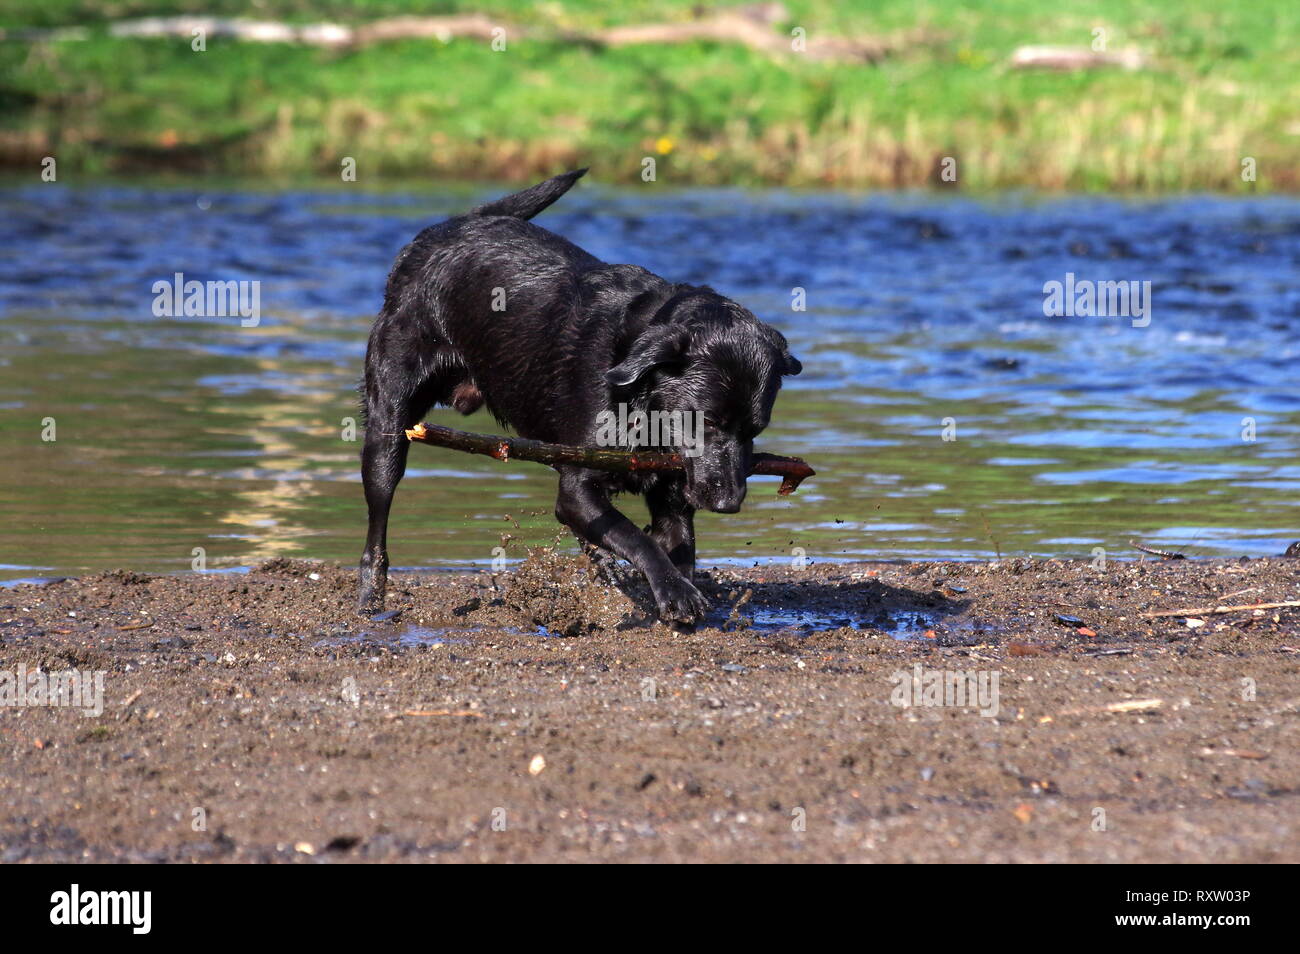 Black labrador burying stick on river bank Stock Photo